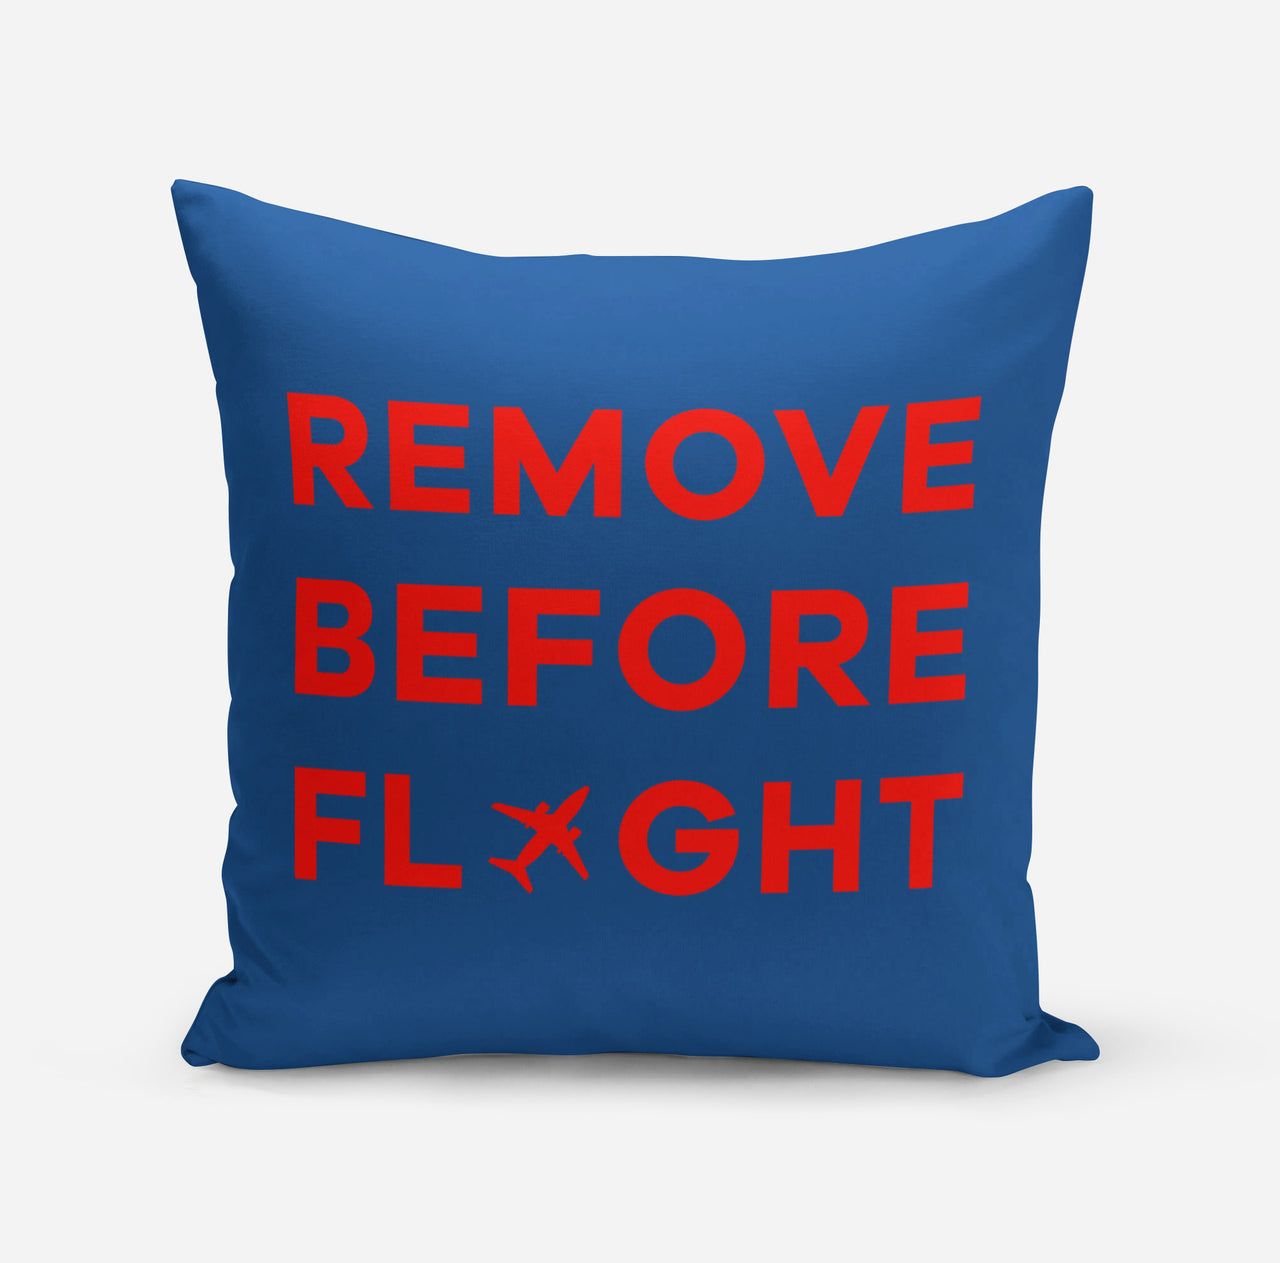 Remove Before Flight Designed Pillows